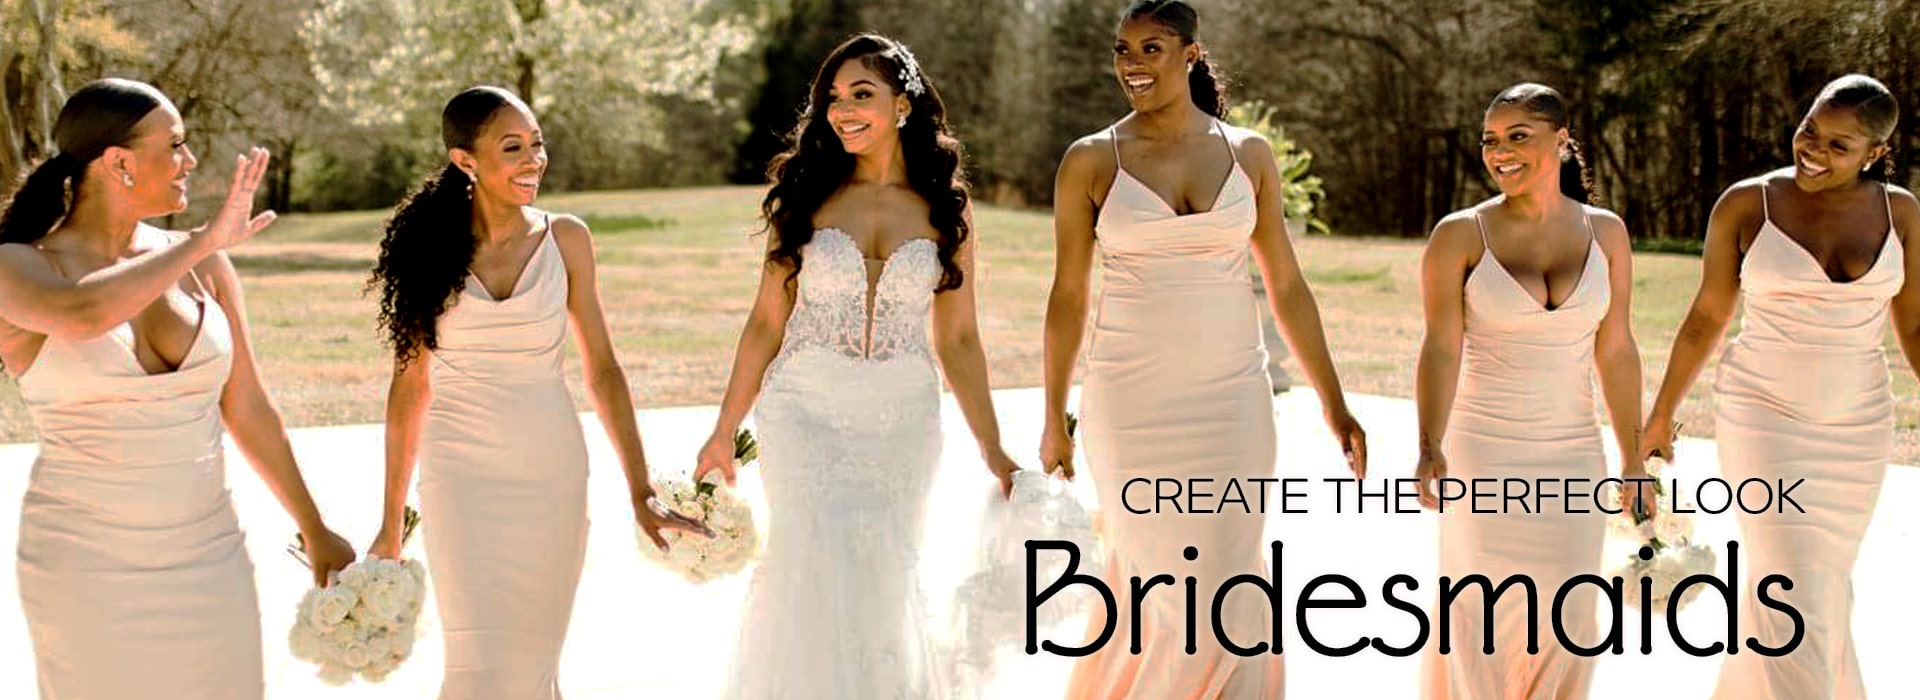 dresses for bridesmaids wedding